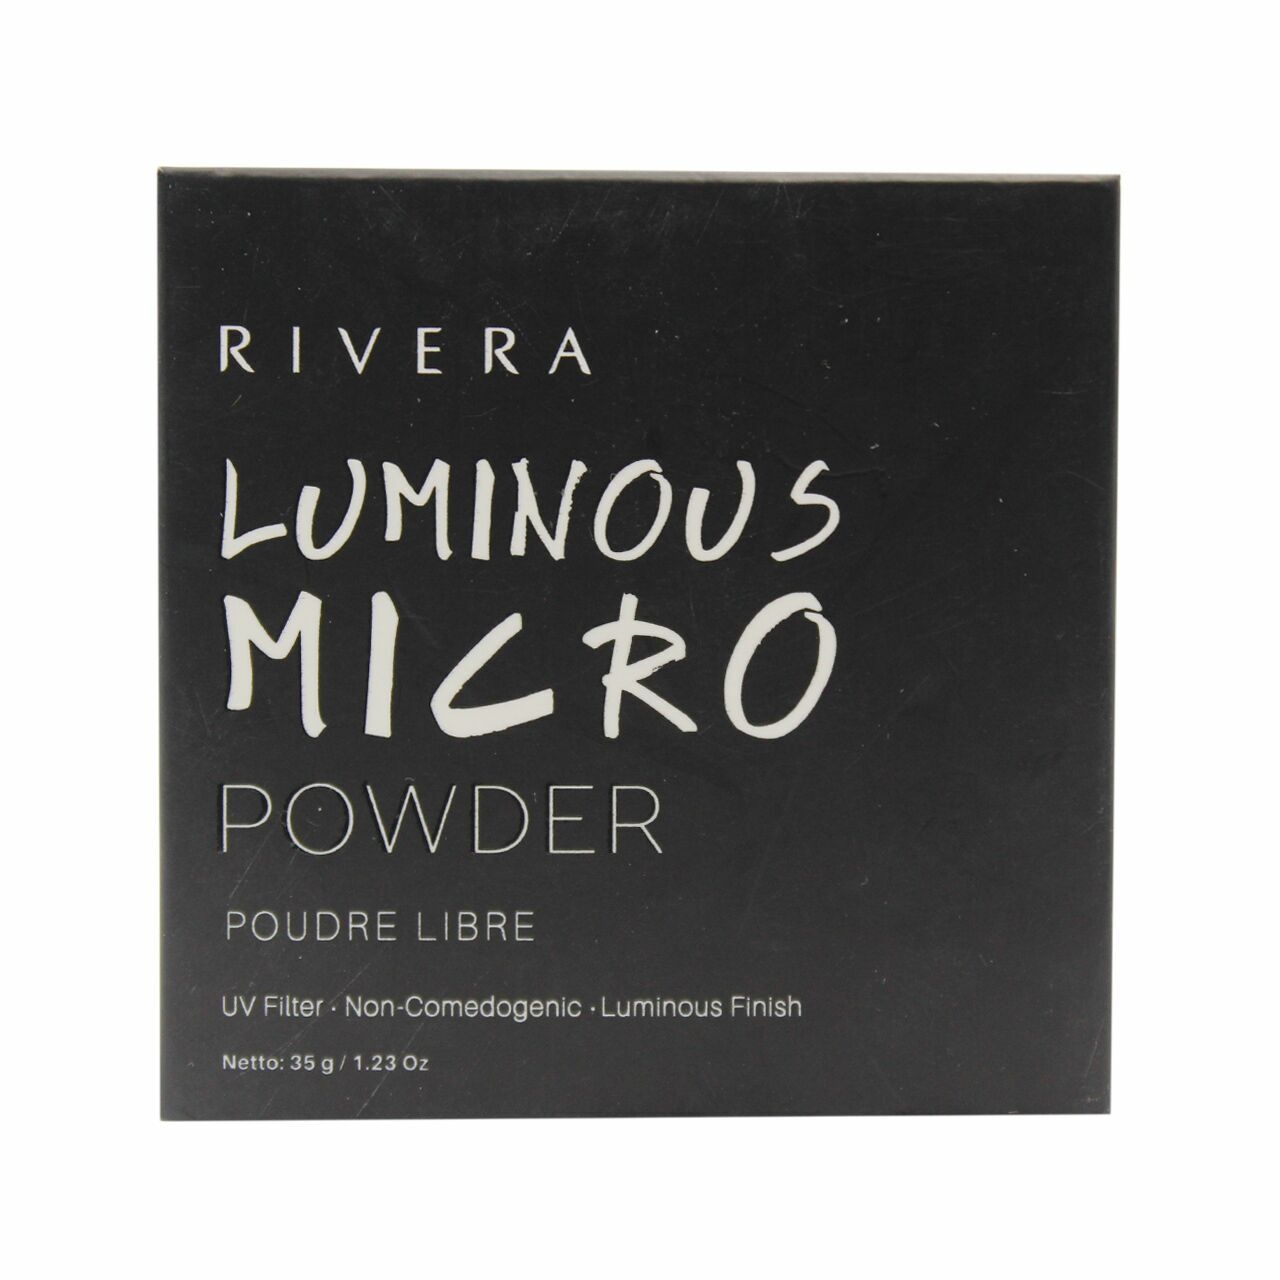 Rivera 03 Sand Beige Luminous Micro Powder